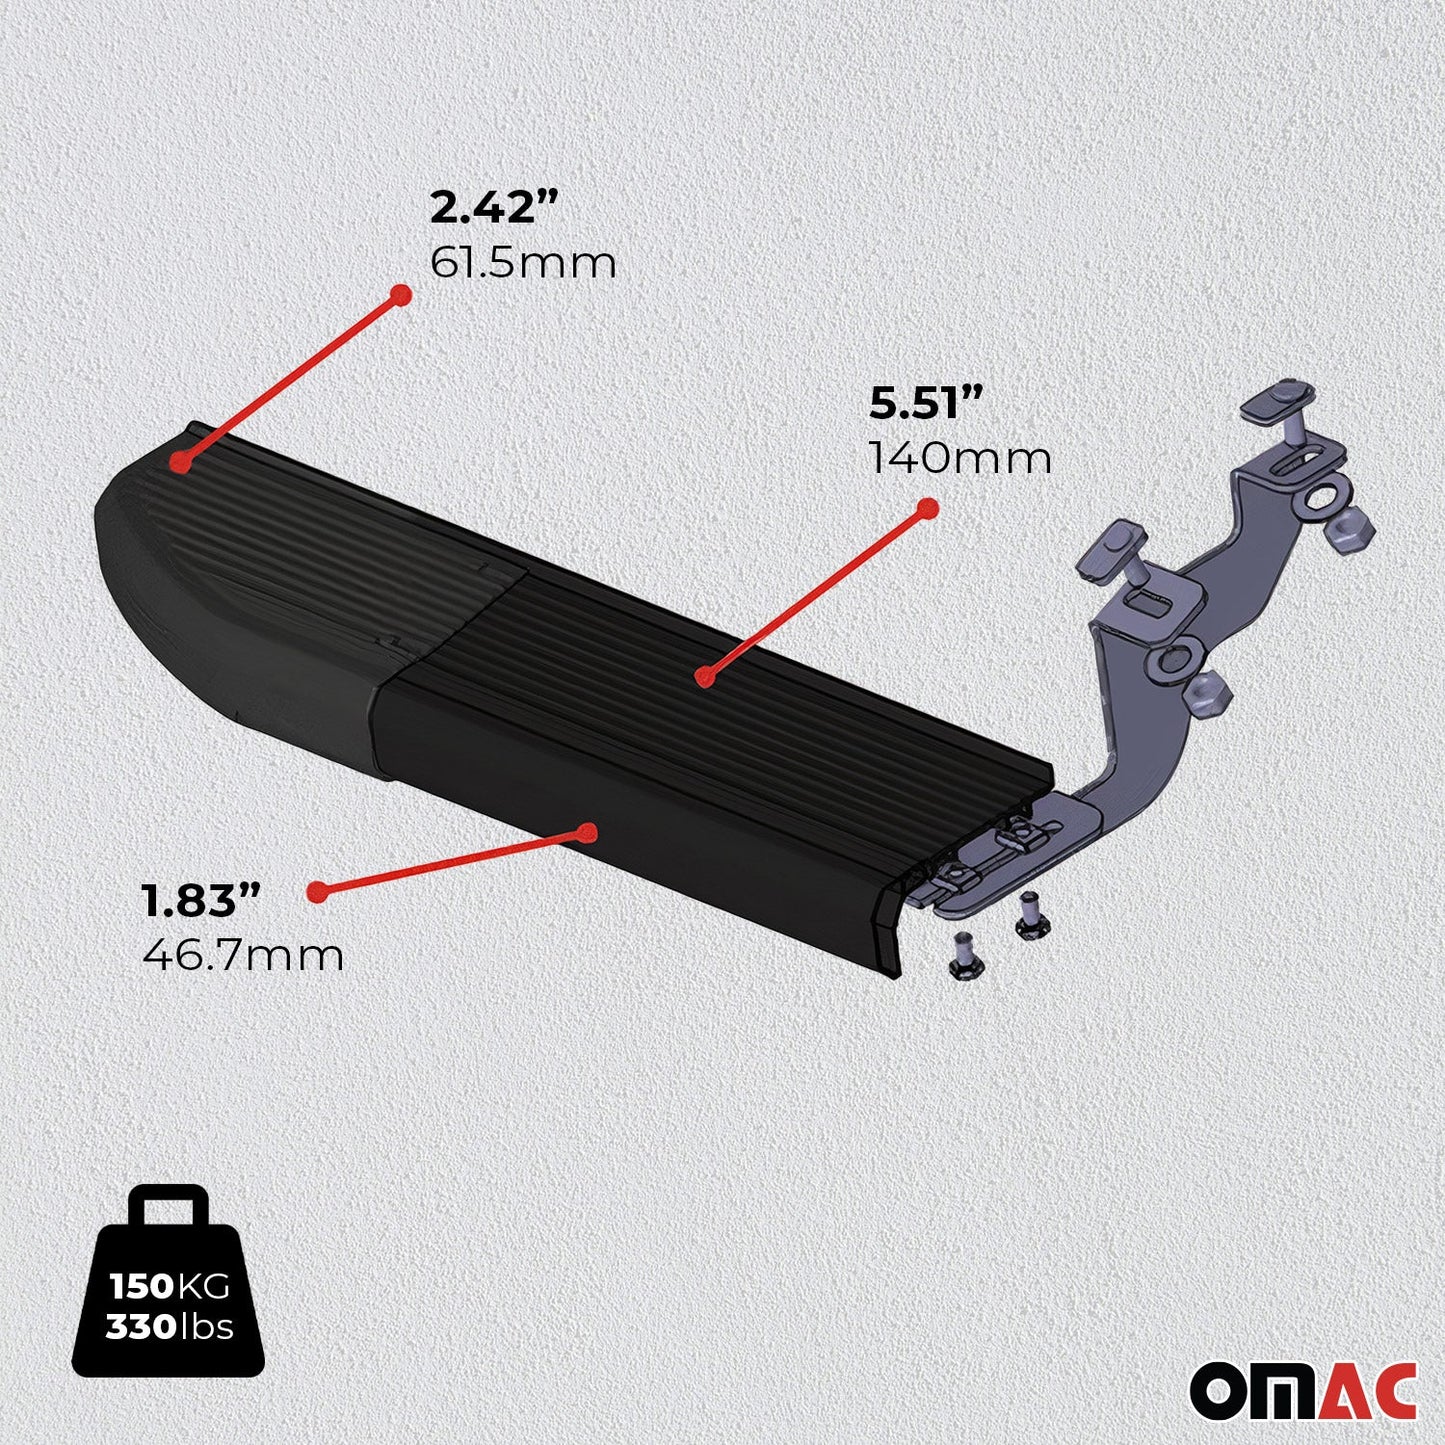 OMAC Alu Side Step Nerf Bars Running Board for Nissan Qashqai 2007-2014 Black 2Pcs 5007936PB